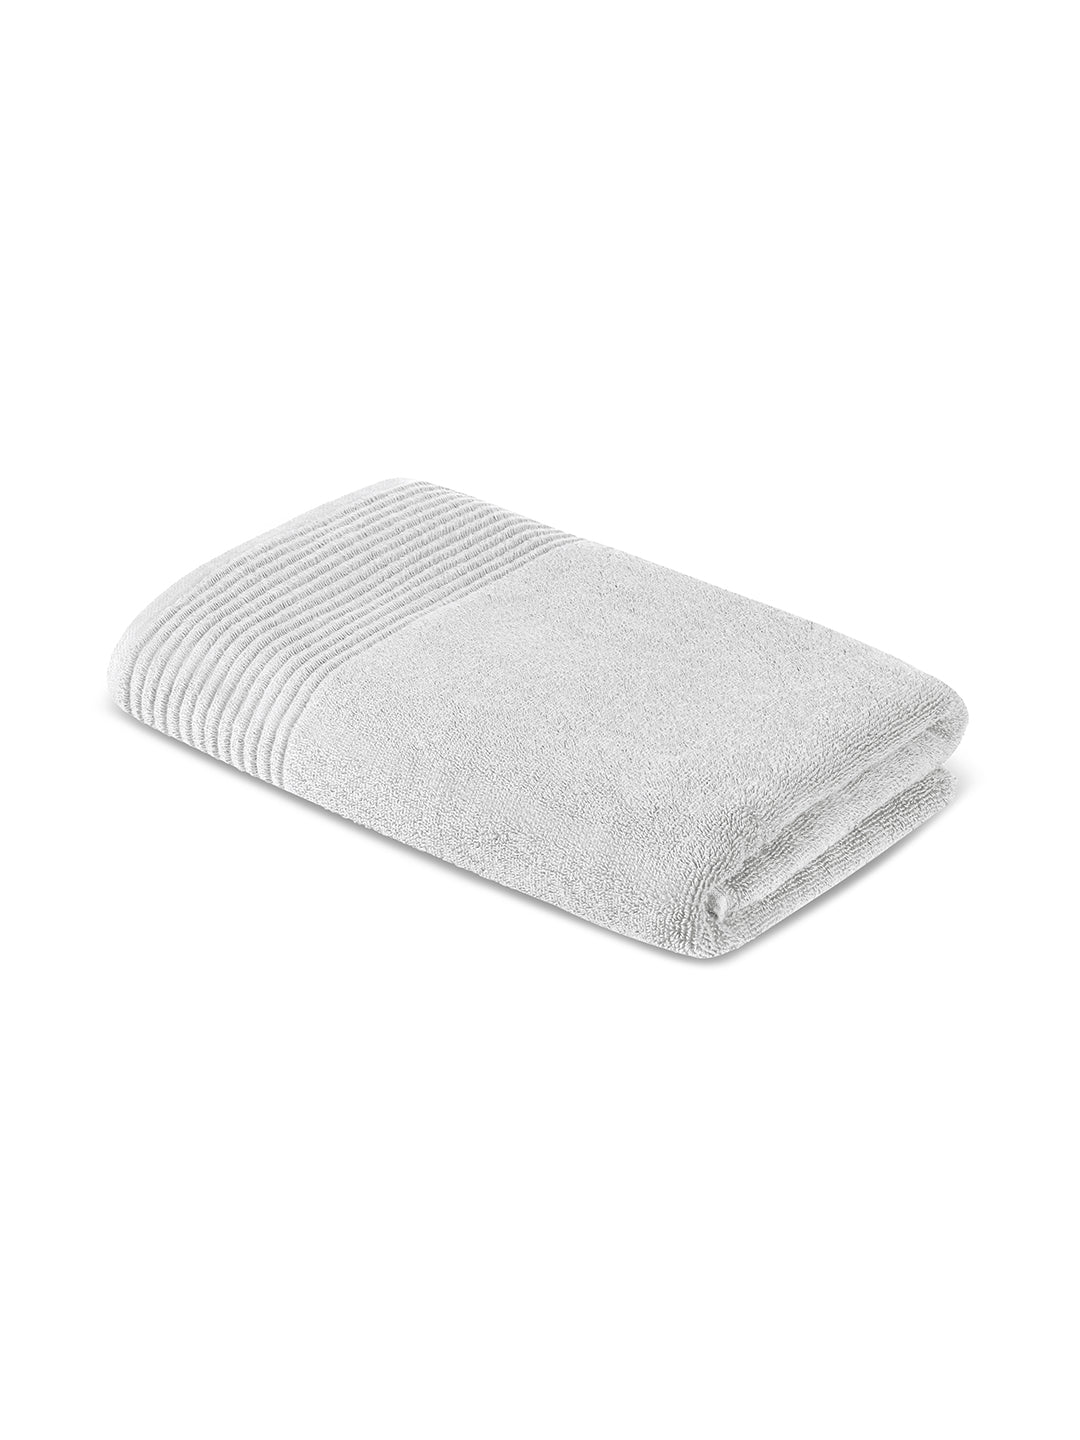 Gold Lush Spa Bath Towel